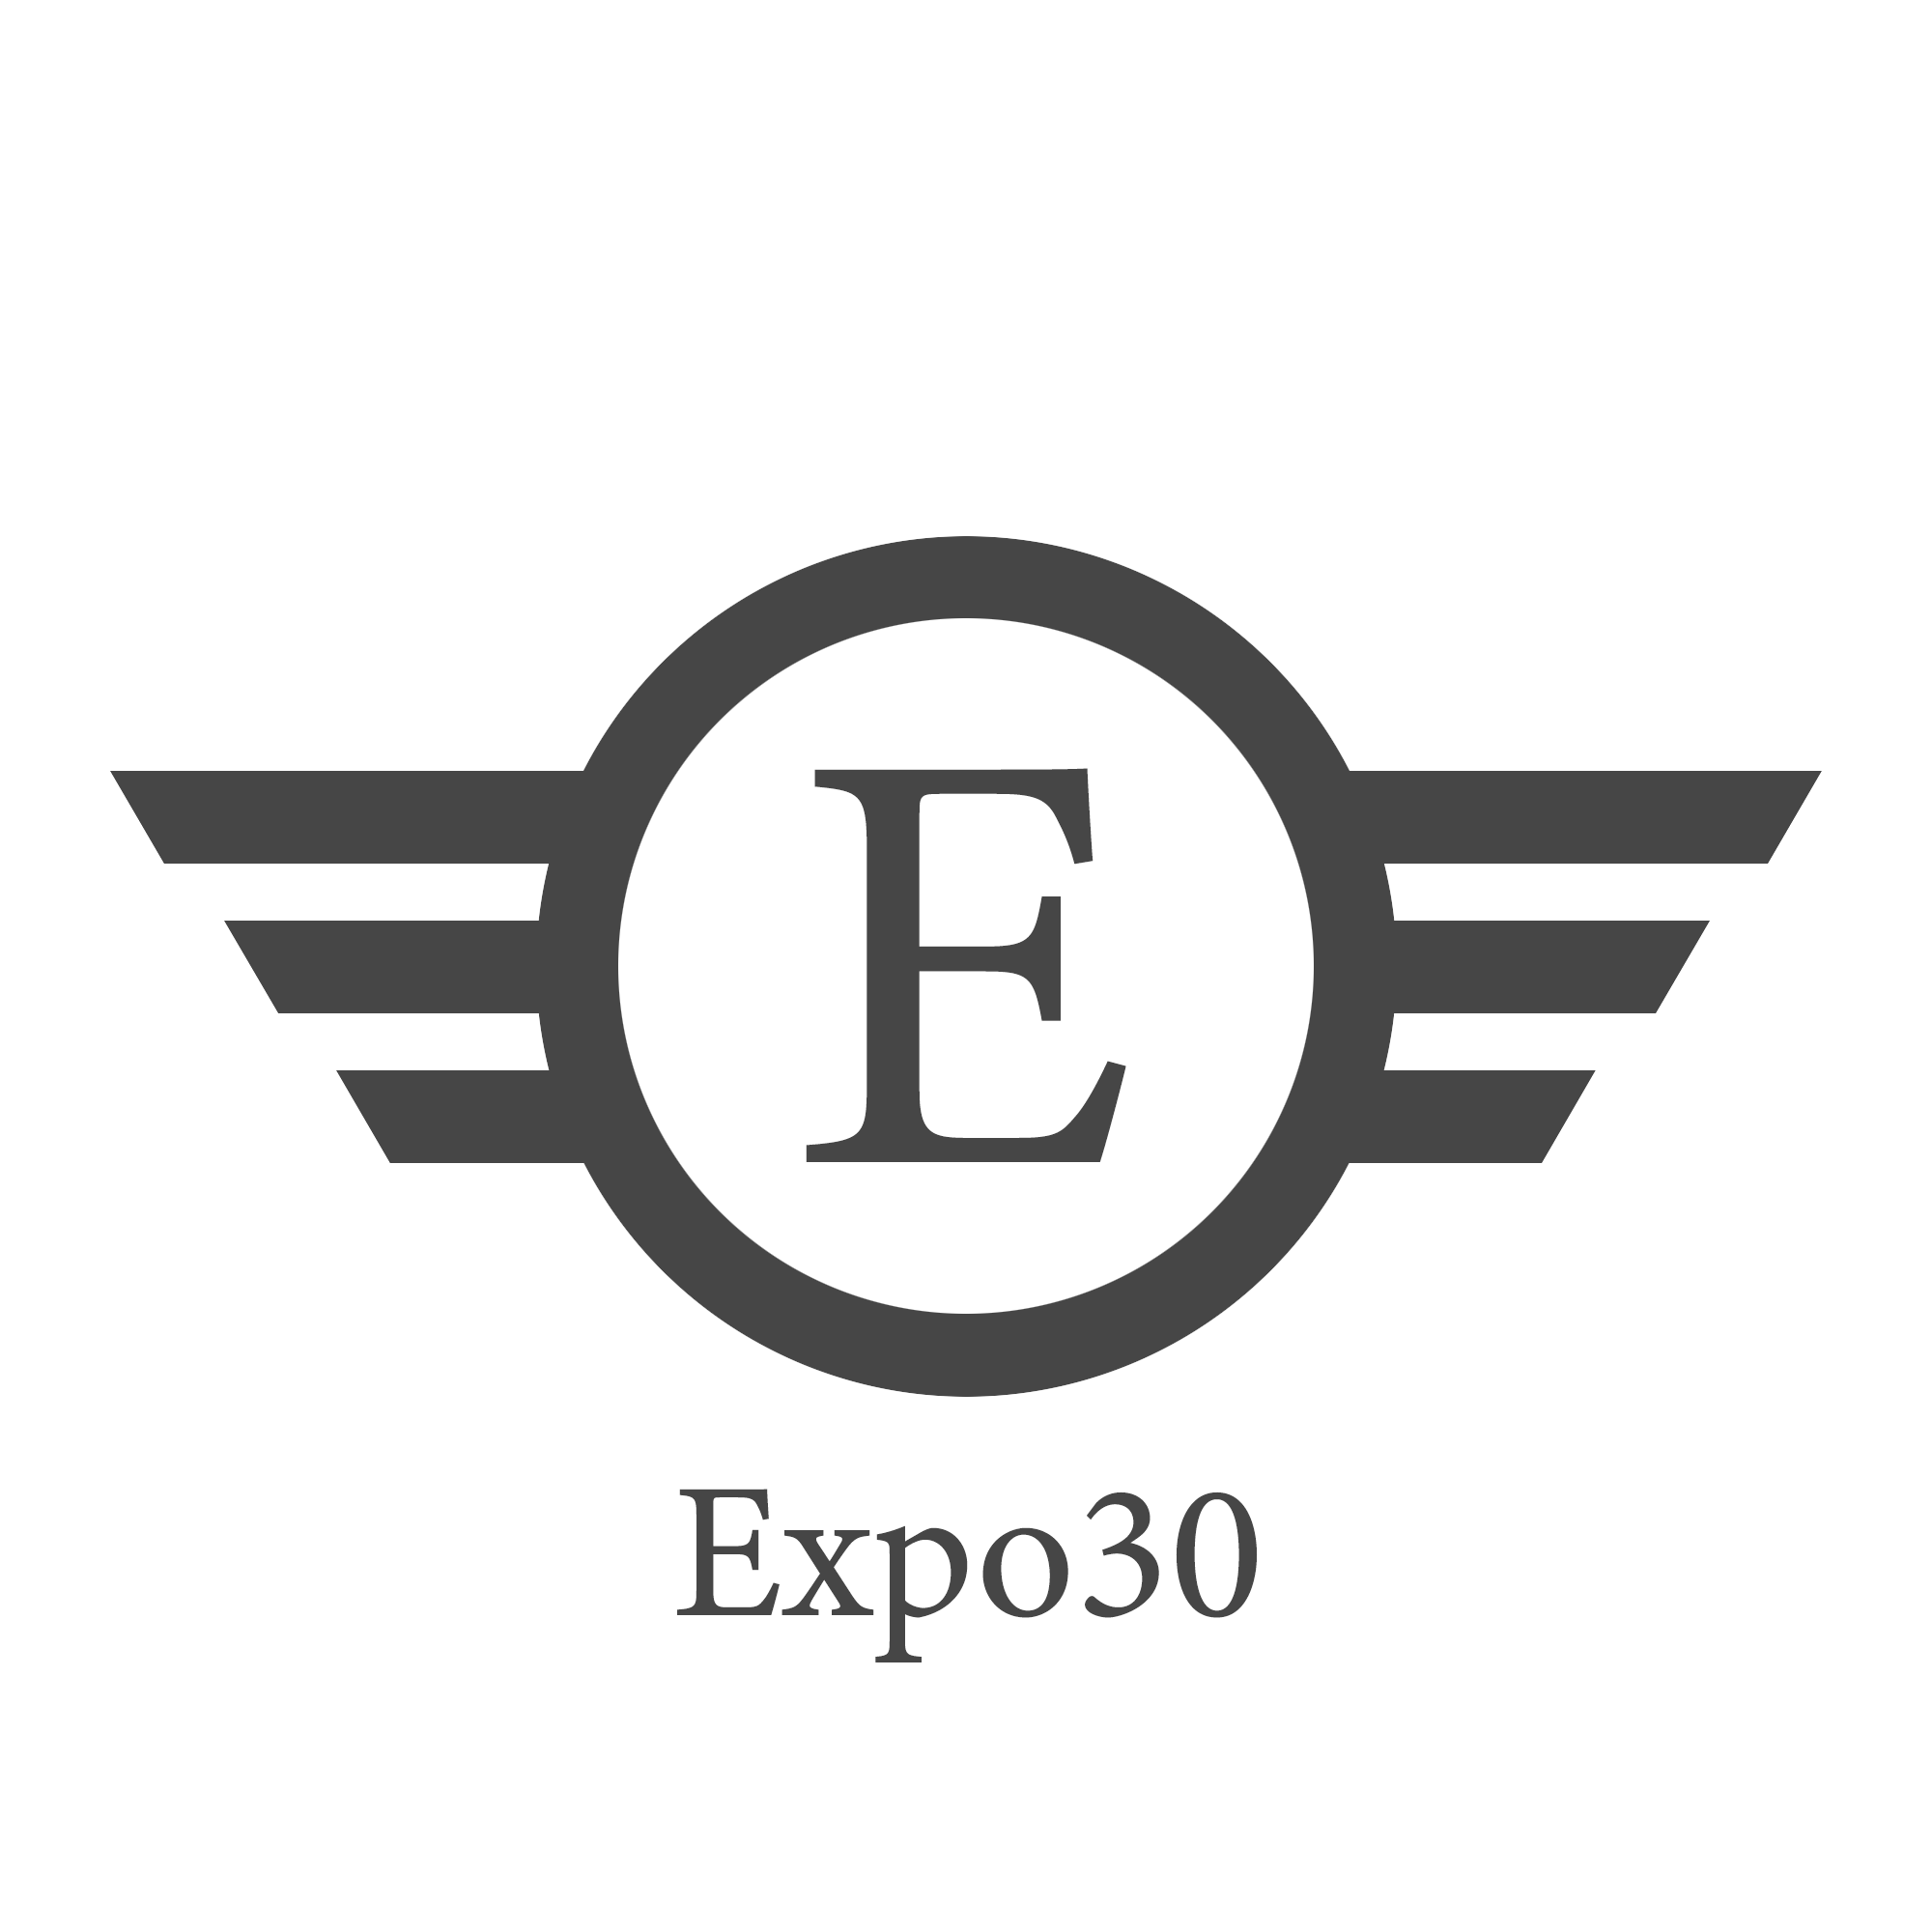 (c) Expo30.de